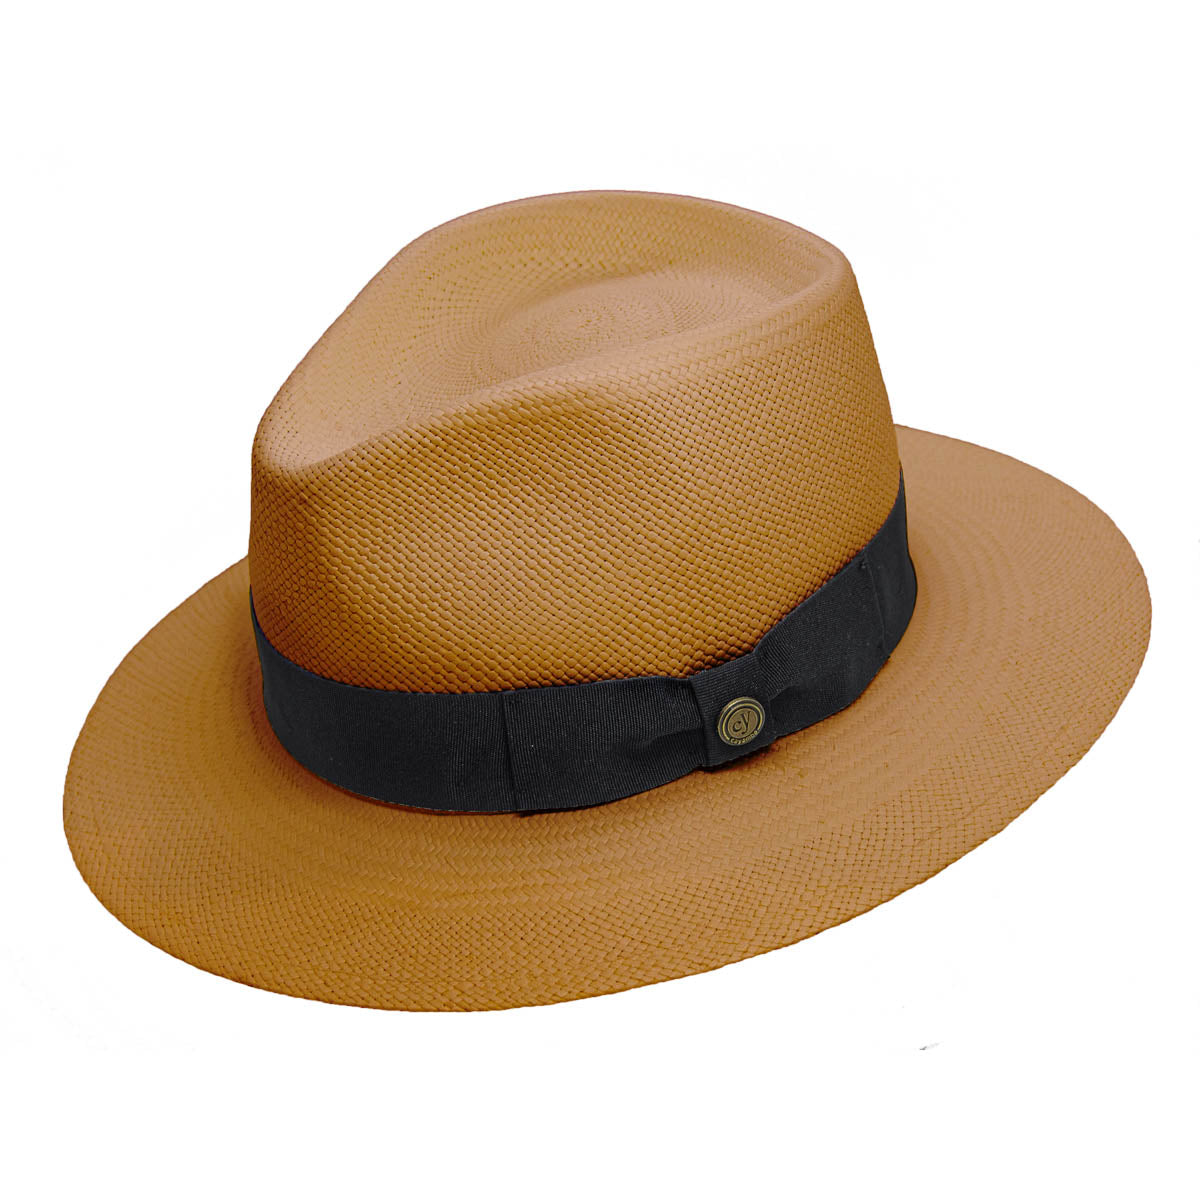 Varon Classic | Panama Hat